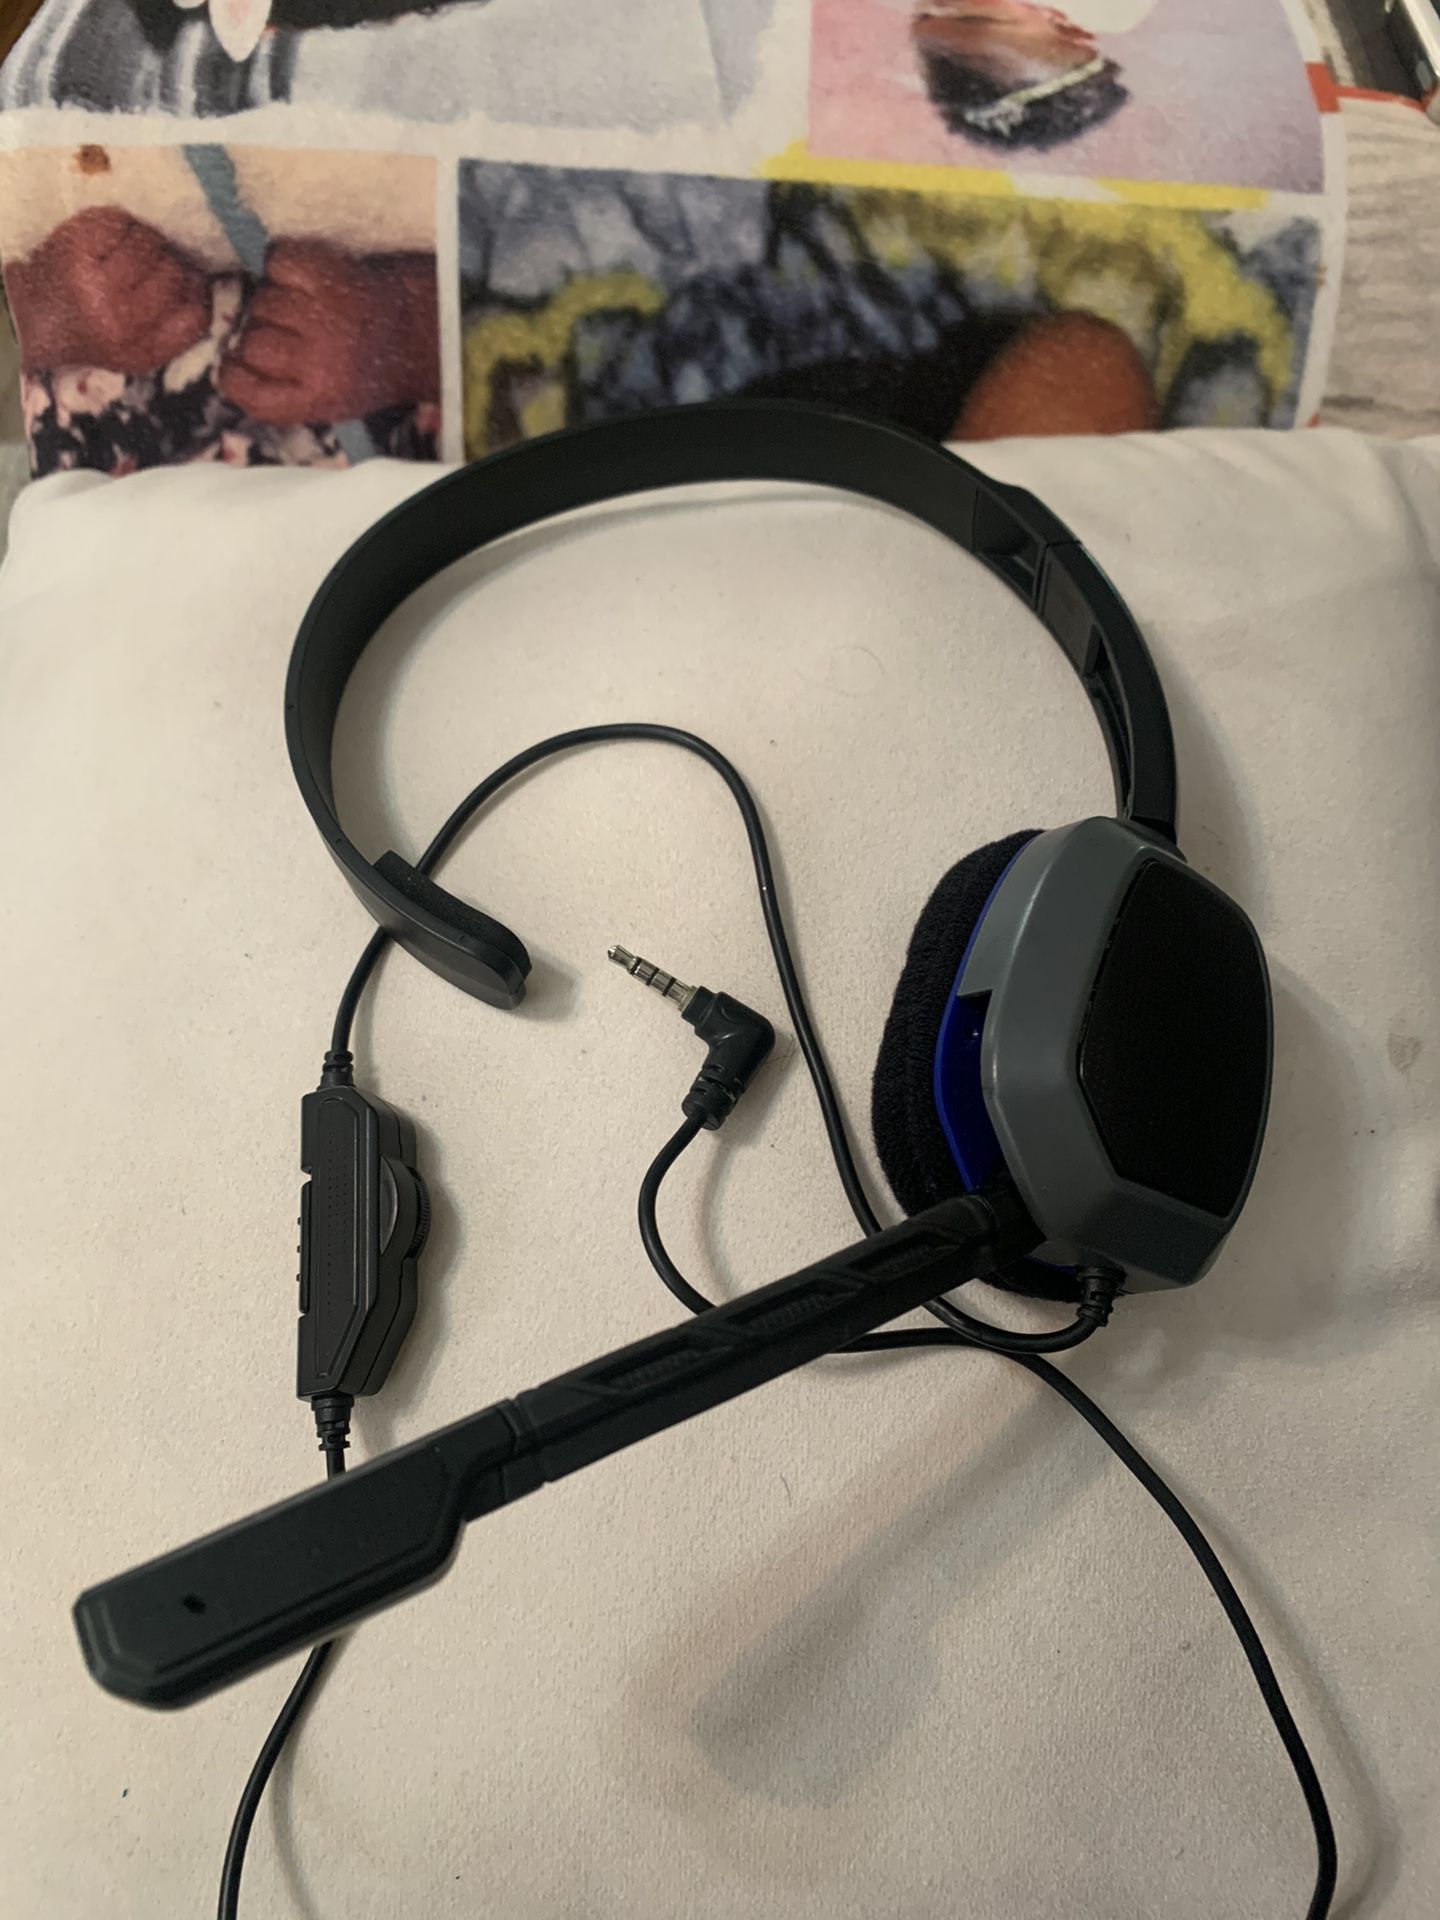 PlayStation headphones